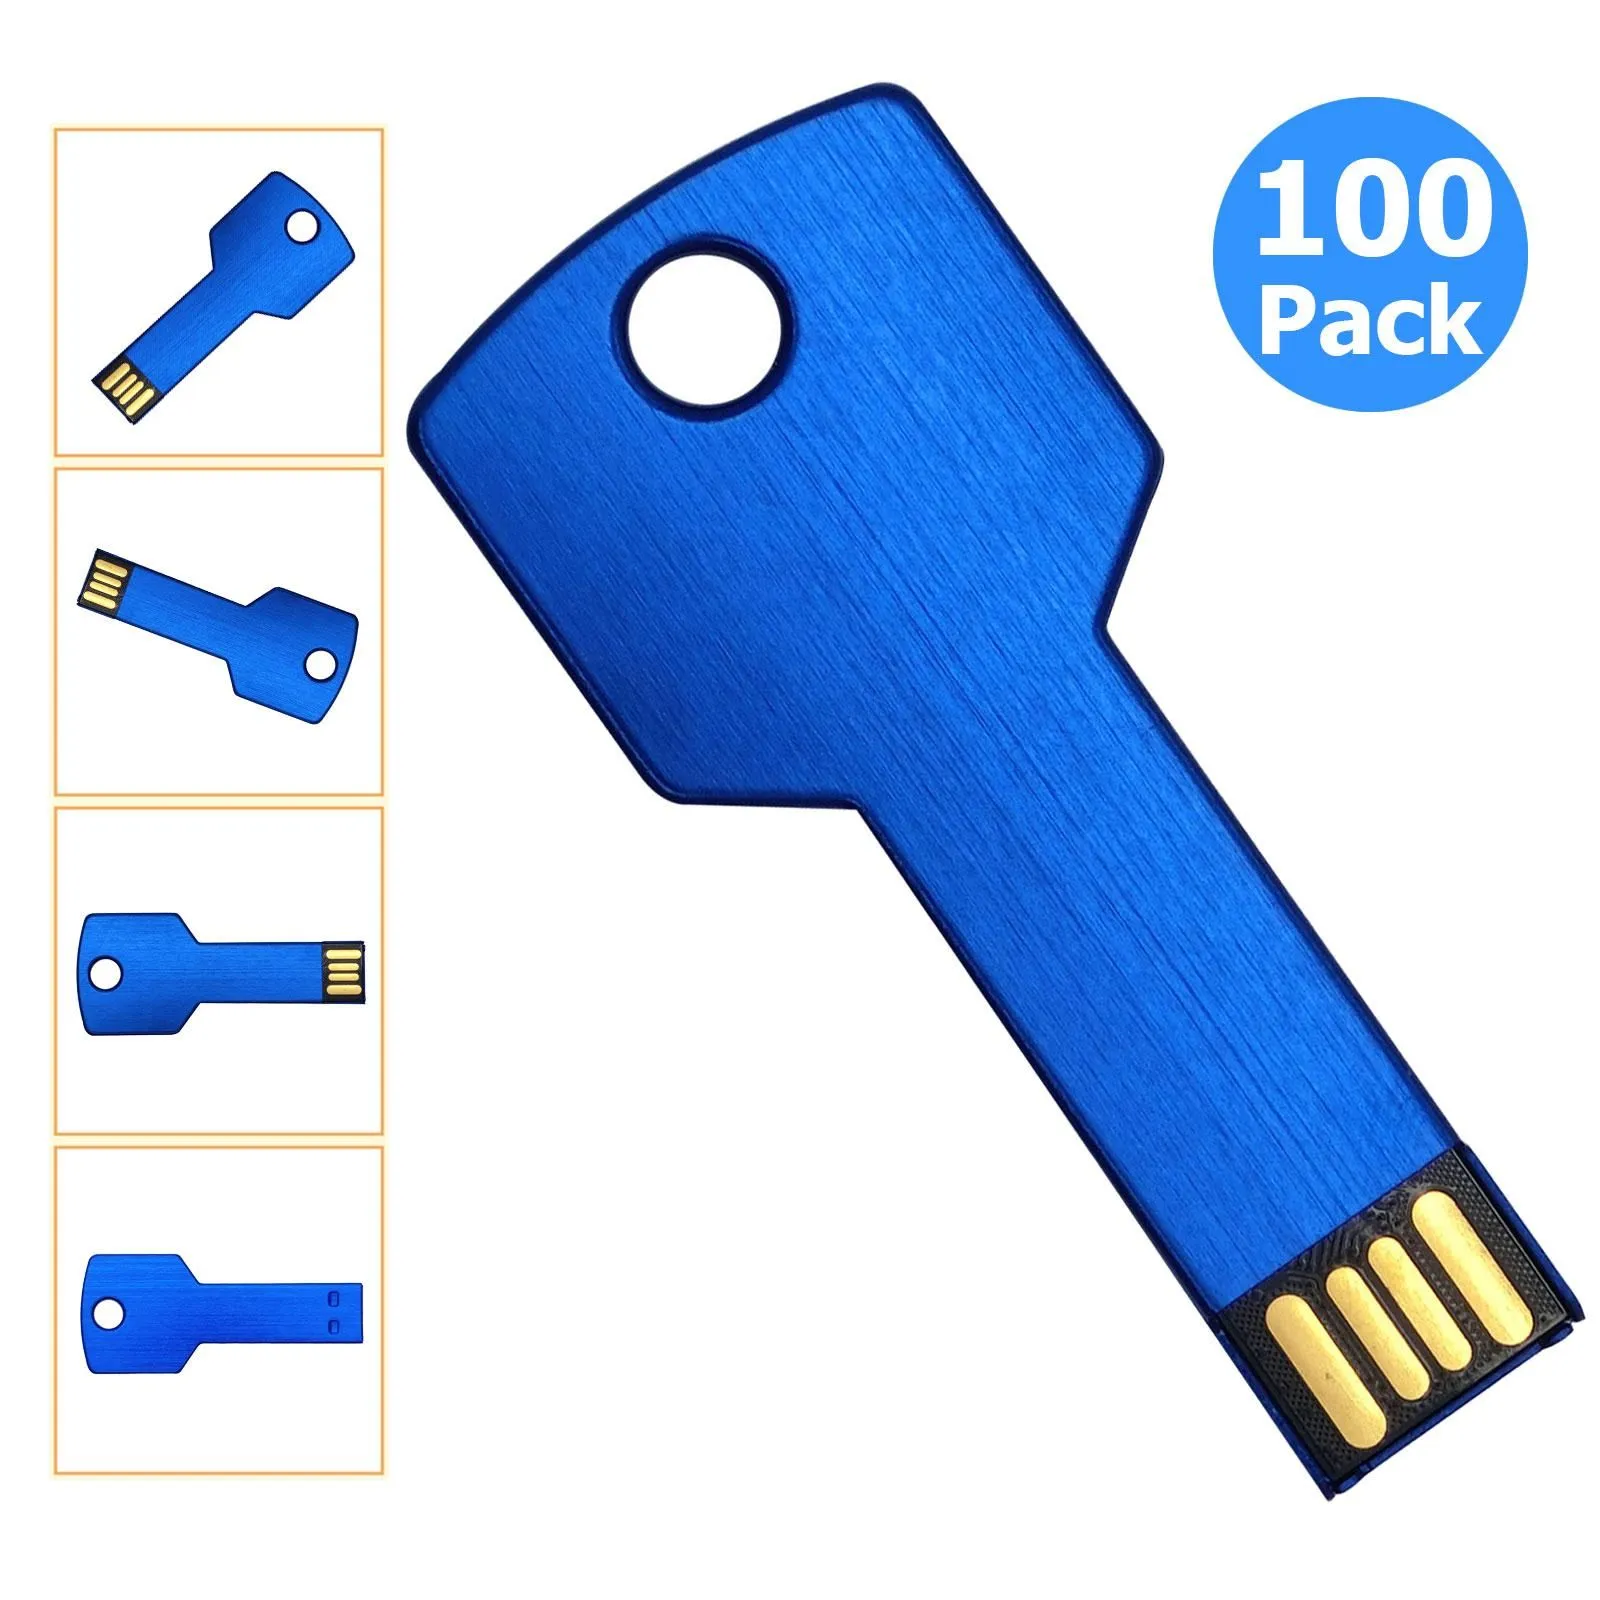 Free Shipping 100pcs 16GB USB 2.0 Flash Drives Flash Memory Stick Metal Key Blank Media for PC Laptop Macbook Thumb Pen Drives